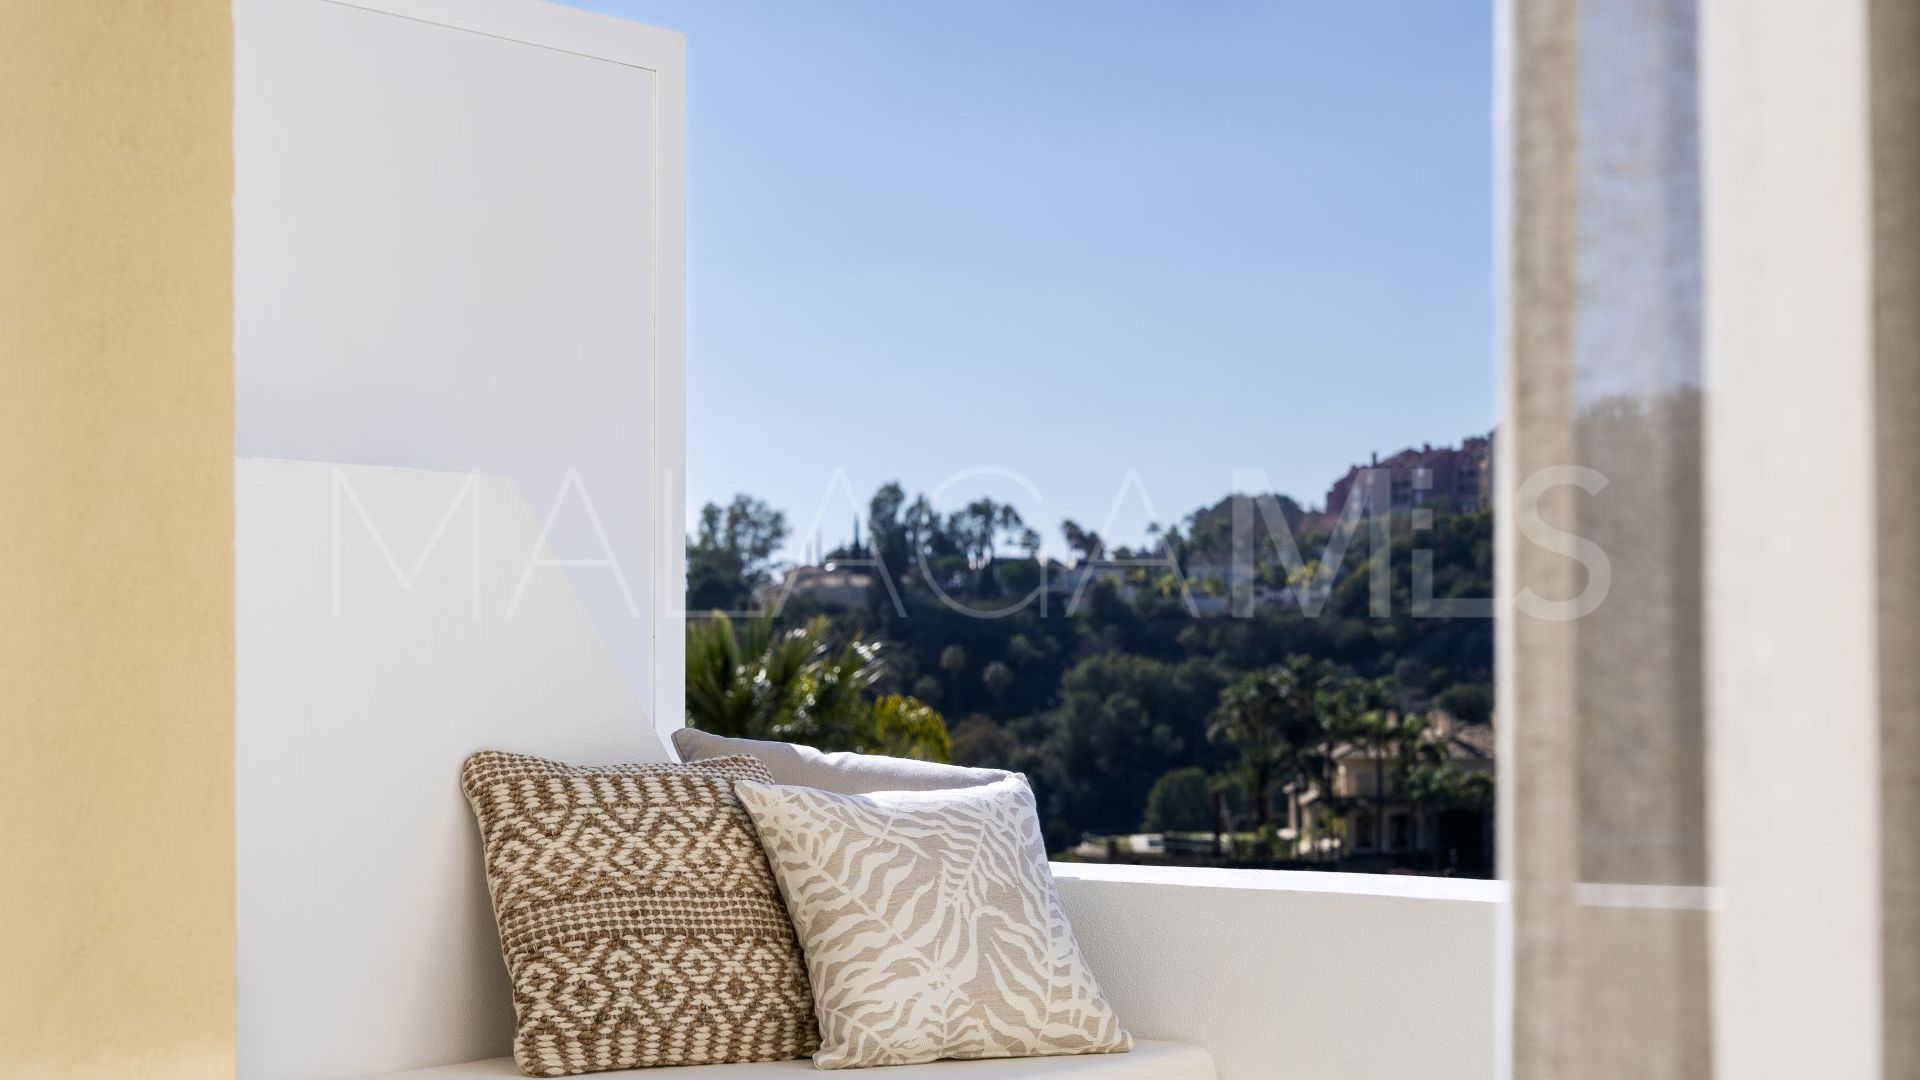 Atico duplex for sale in La Quinta Hills with 3 bedrooms